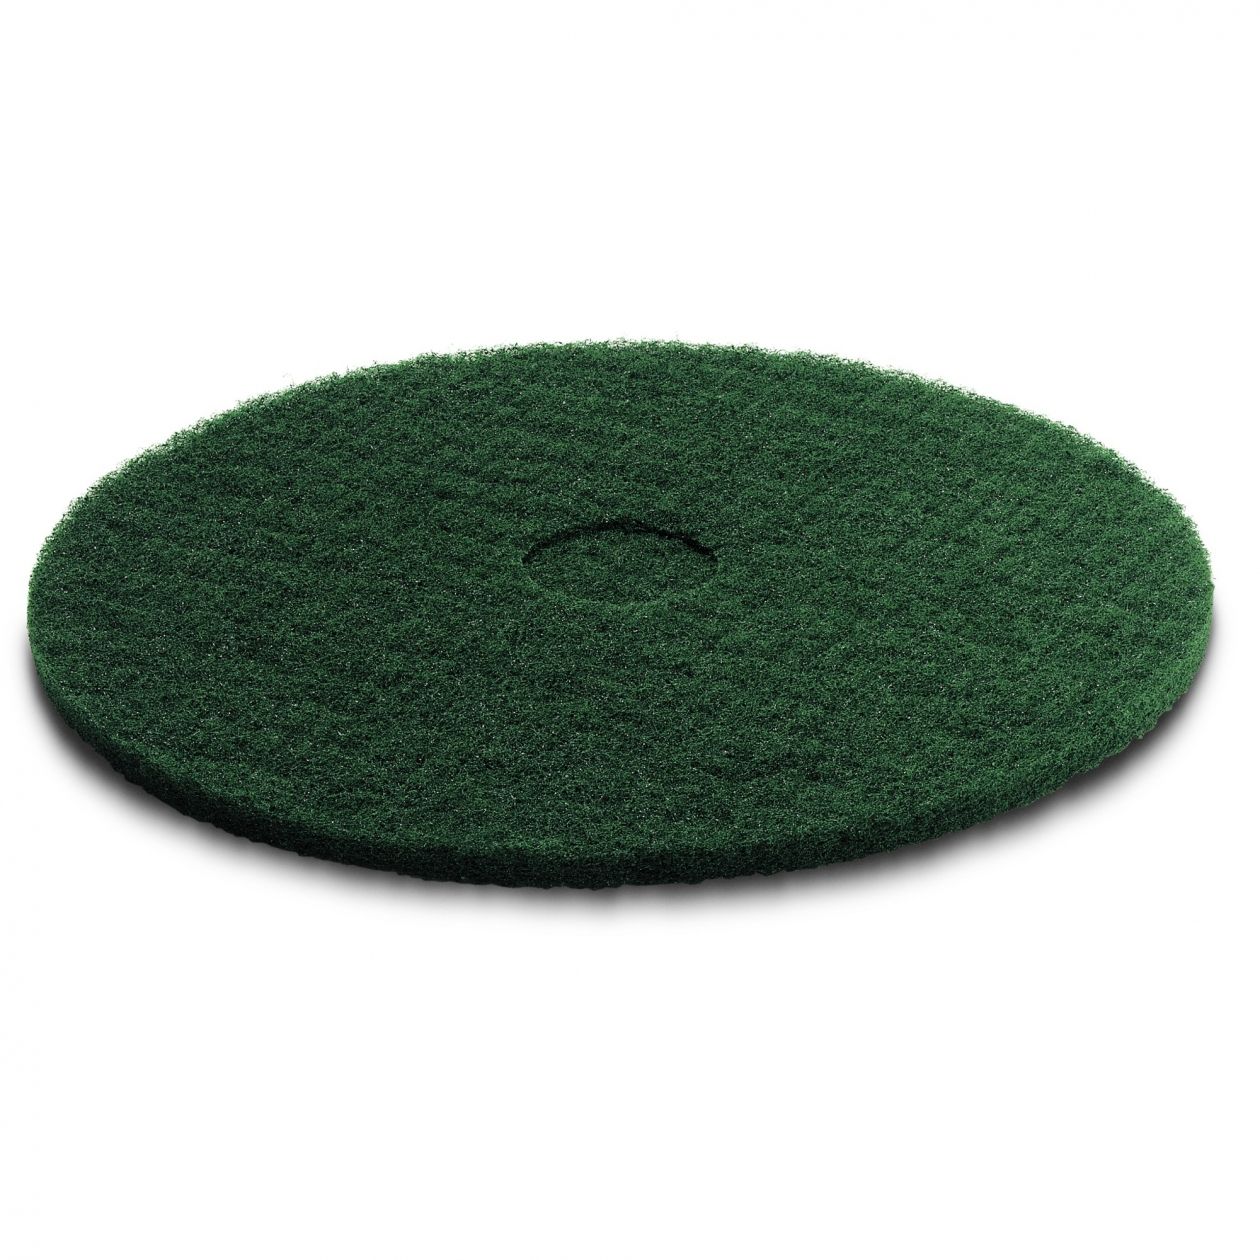 Пад, Karcher средне жесткий, зеленый, 280 mm